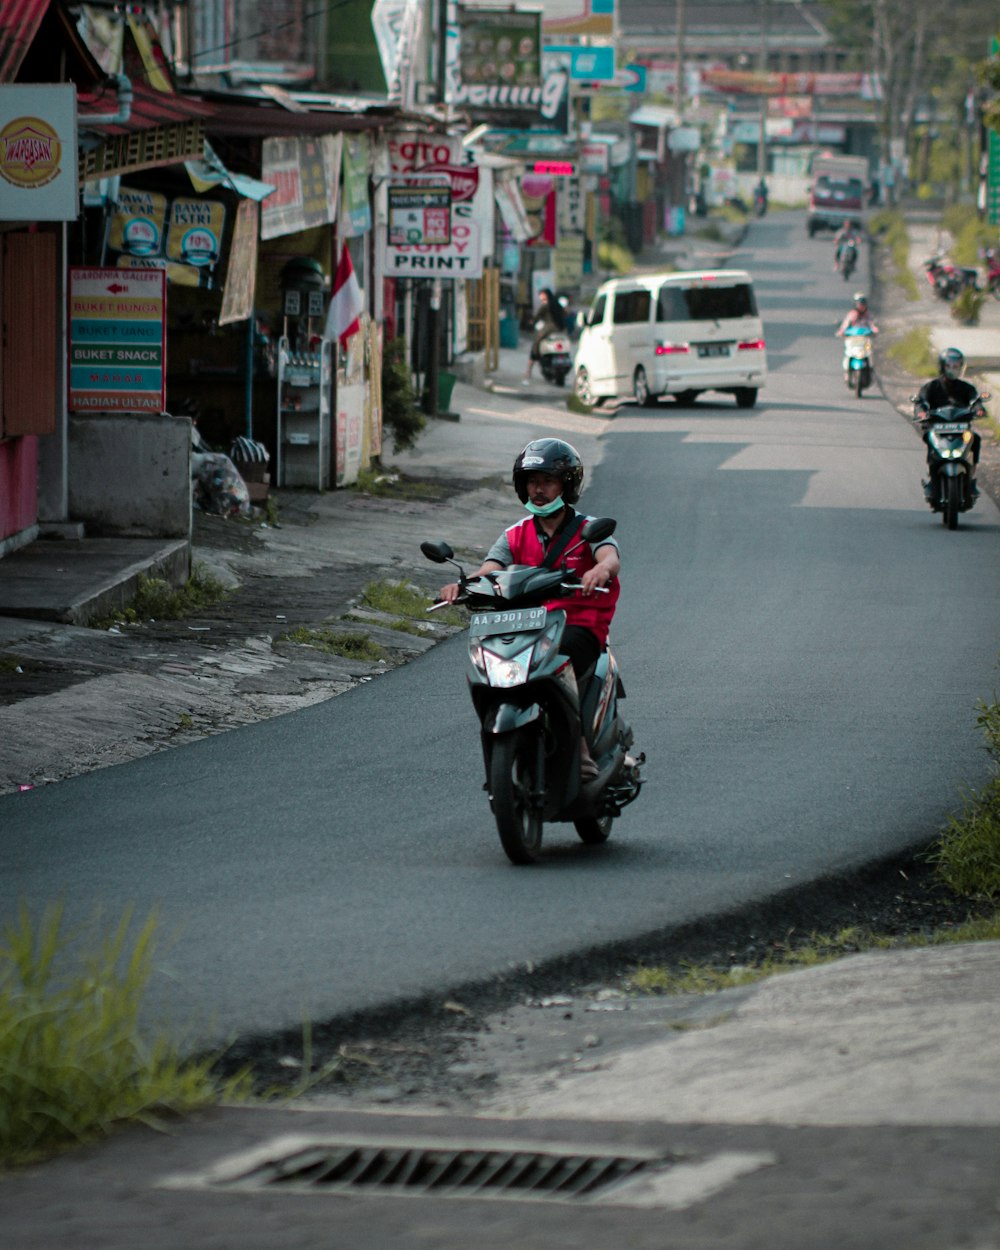 a man riding a motorcycle down a curvy street